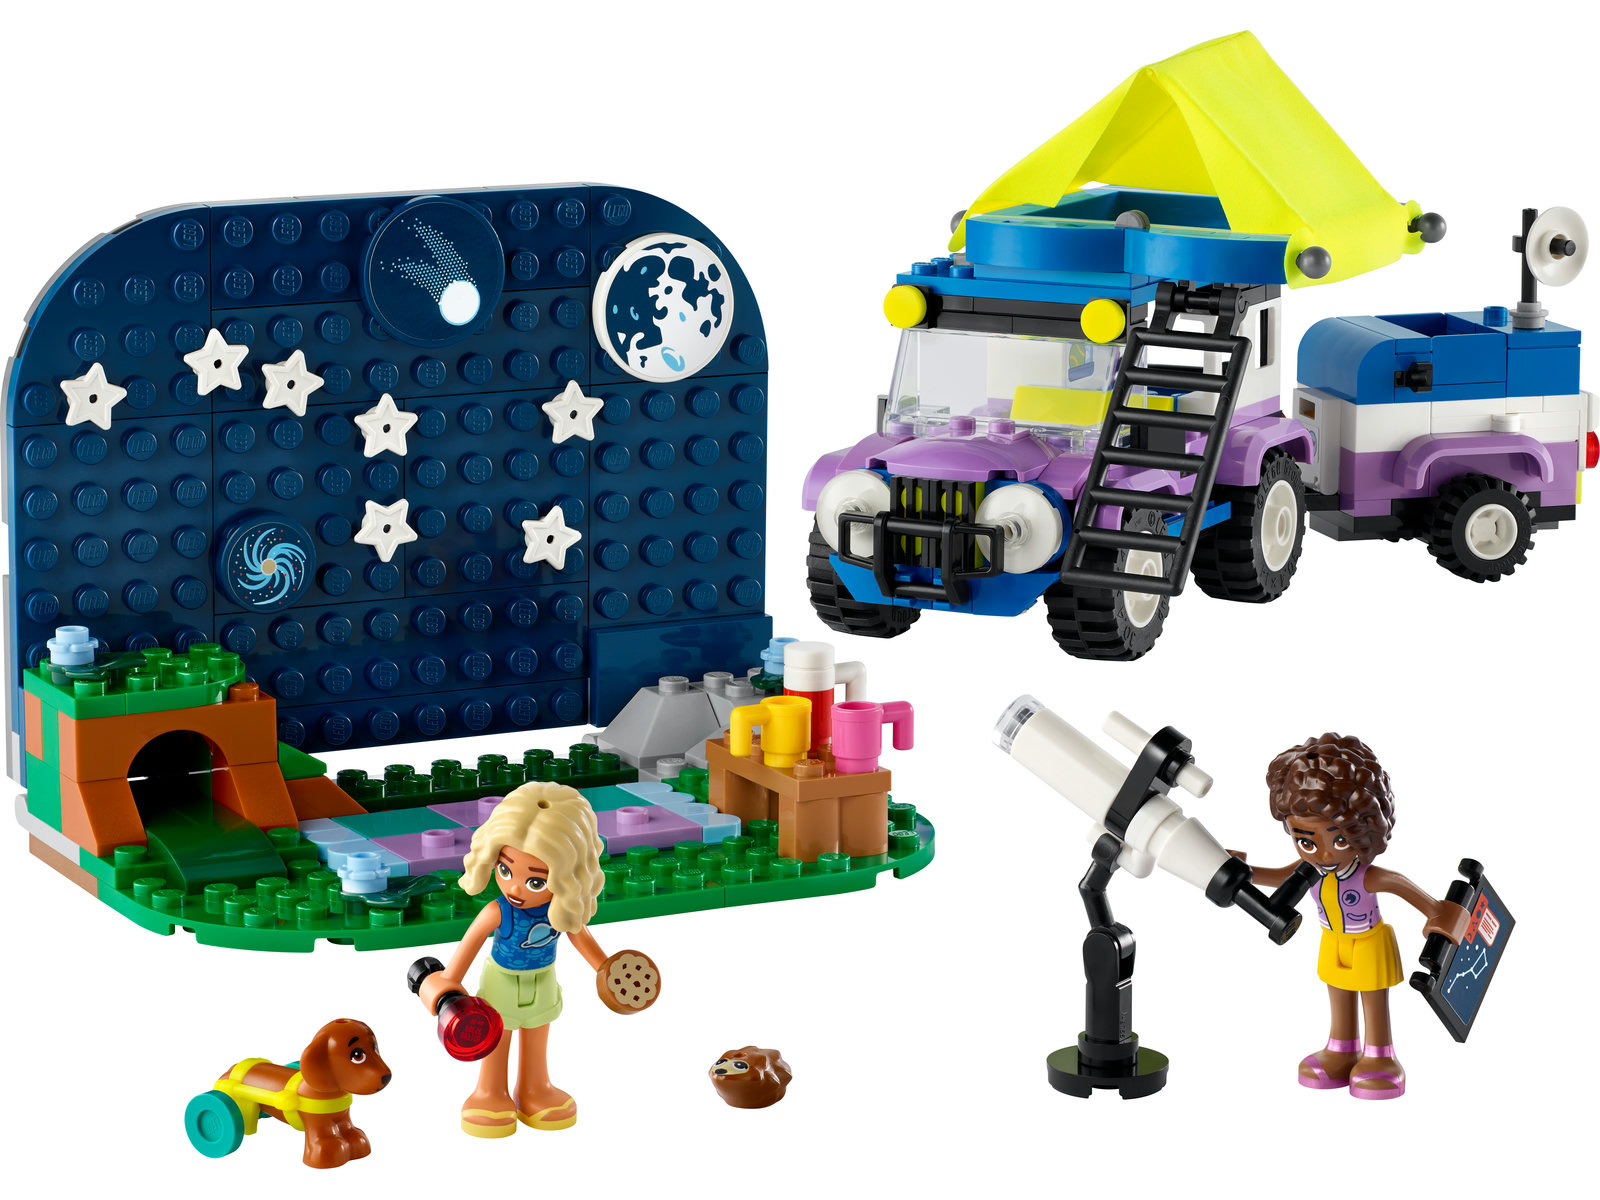 LEGO® Friends 42603 - Sterngucker-Campingfahrzeug